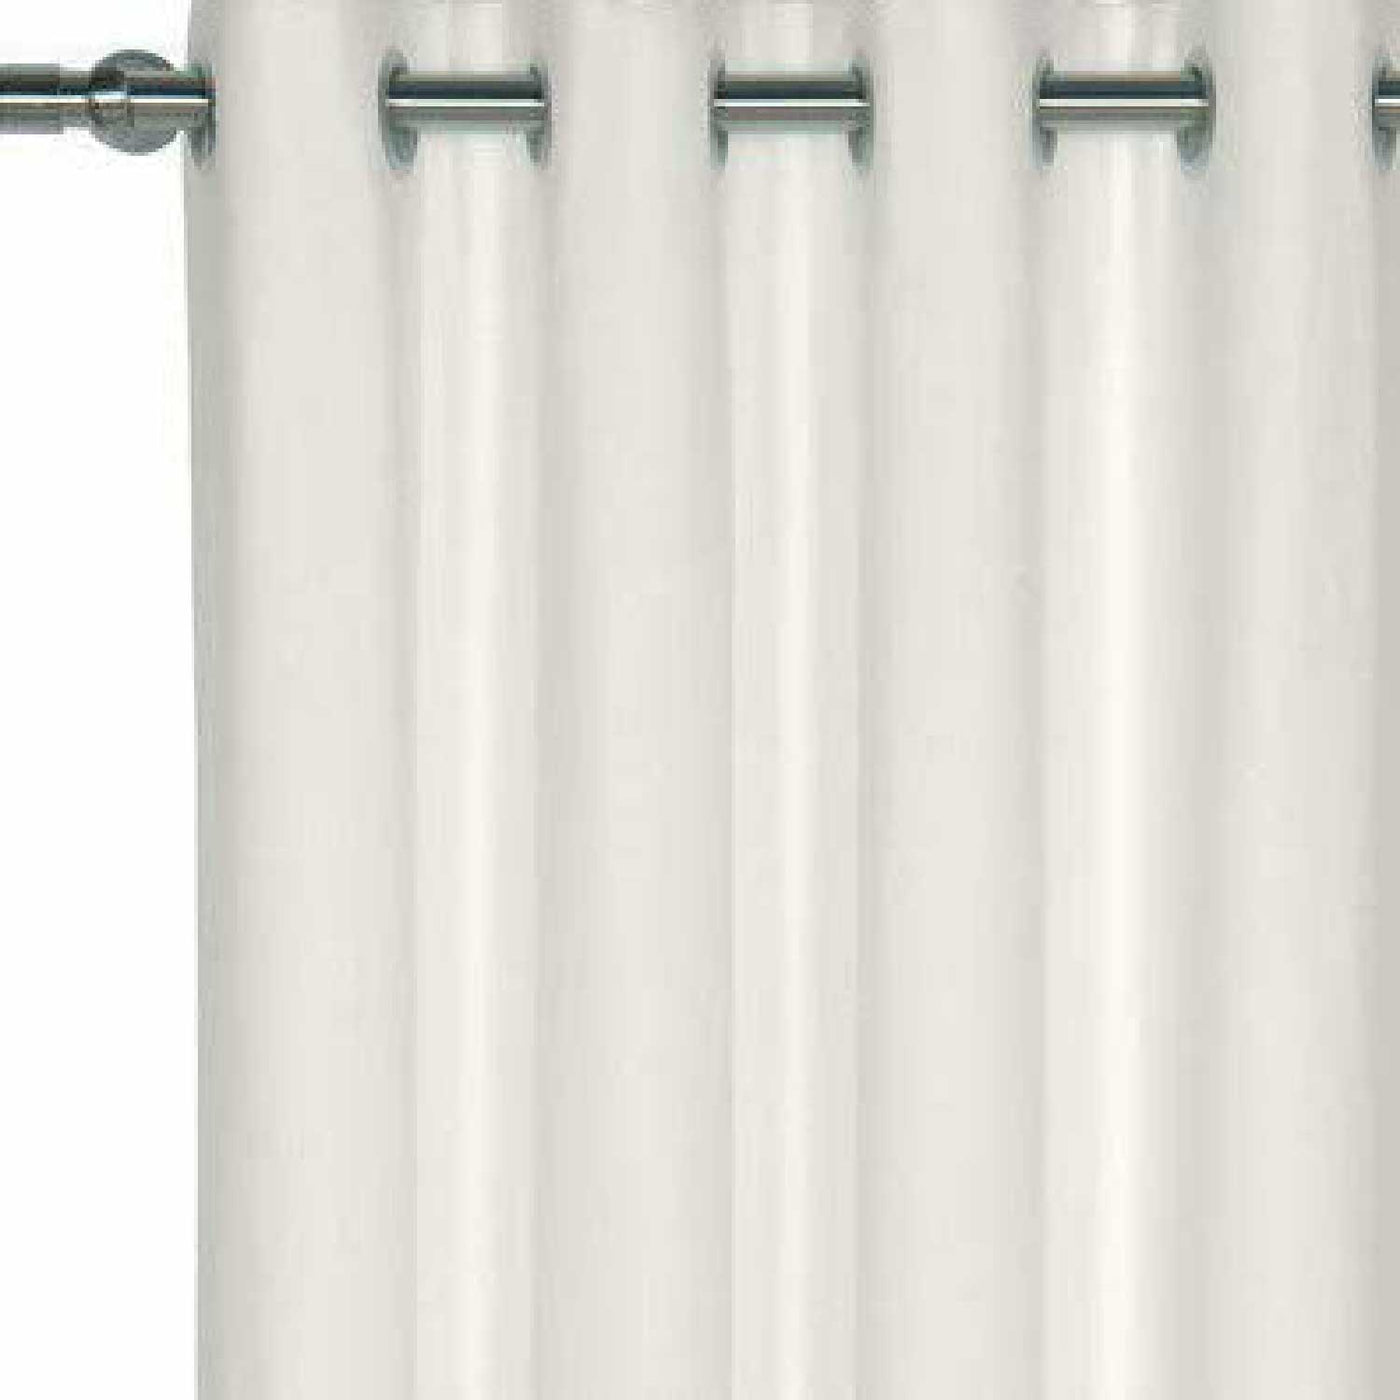 Grommet Curtains 1 Piece - Silver